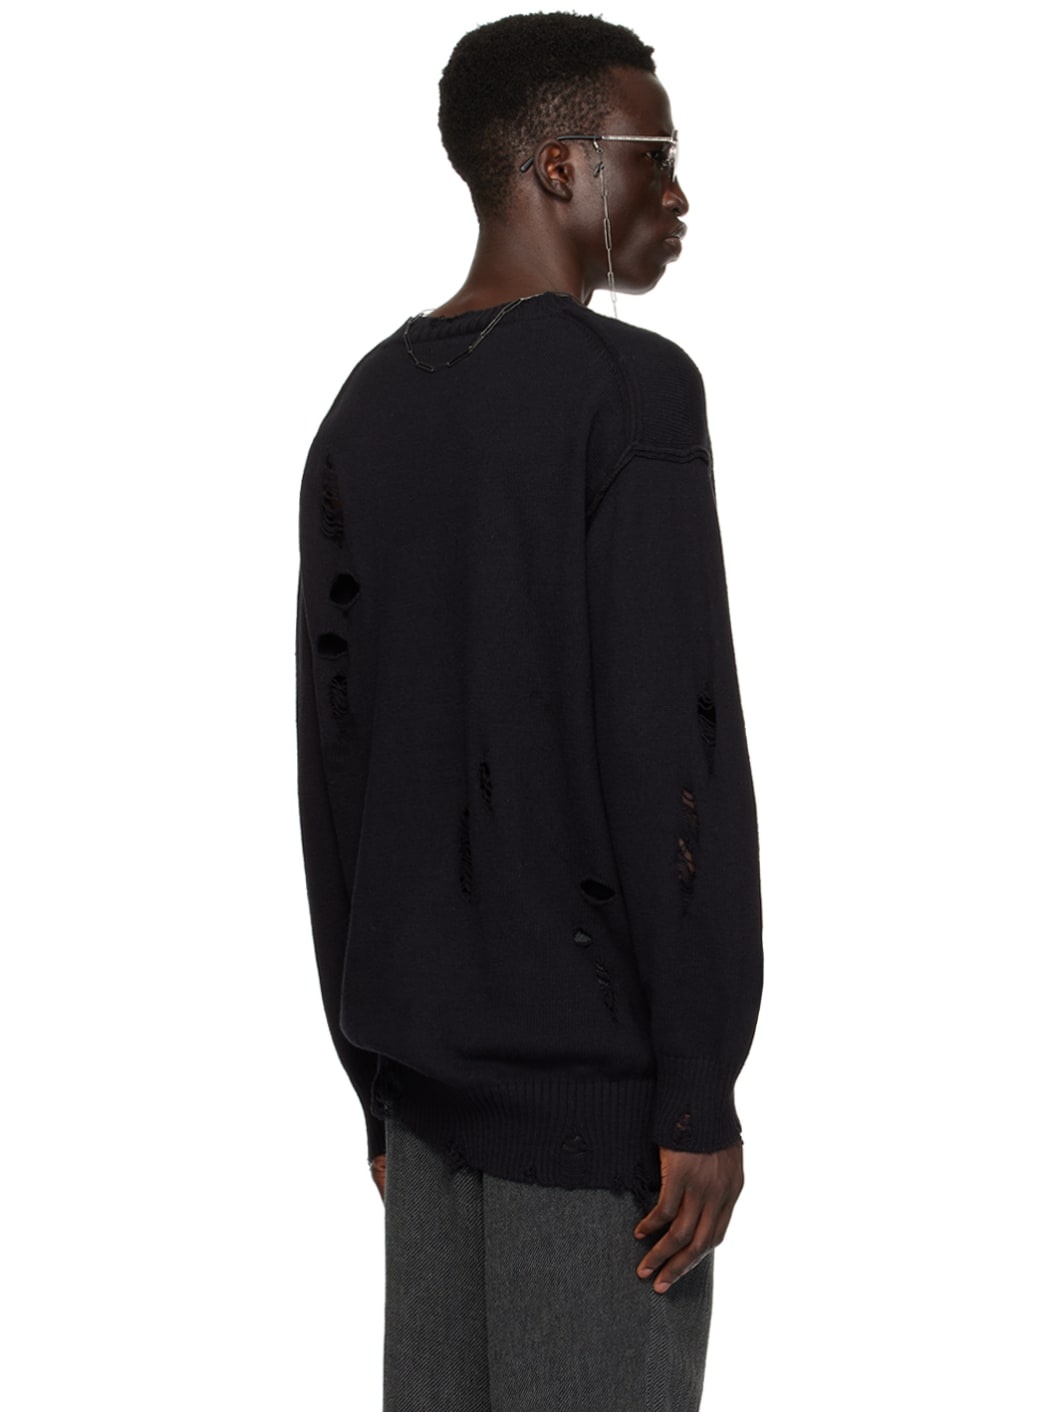 Black Distressed Sweater - 3